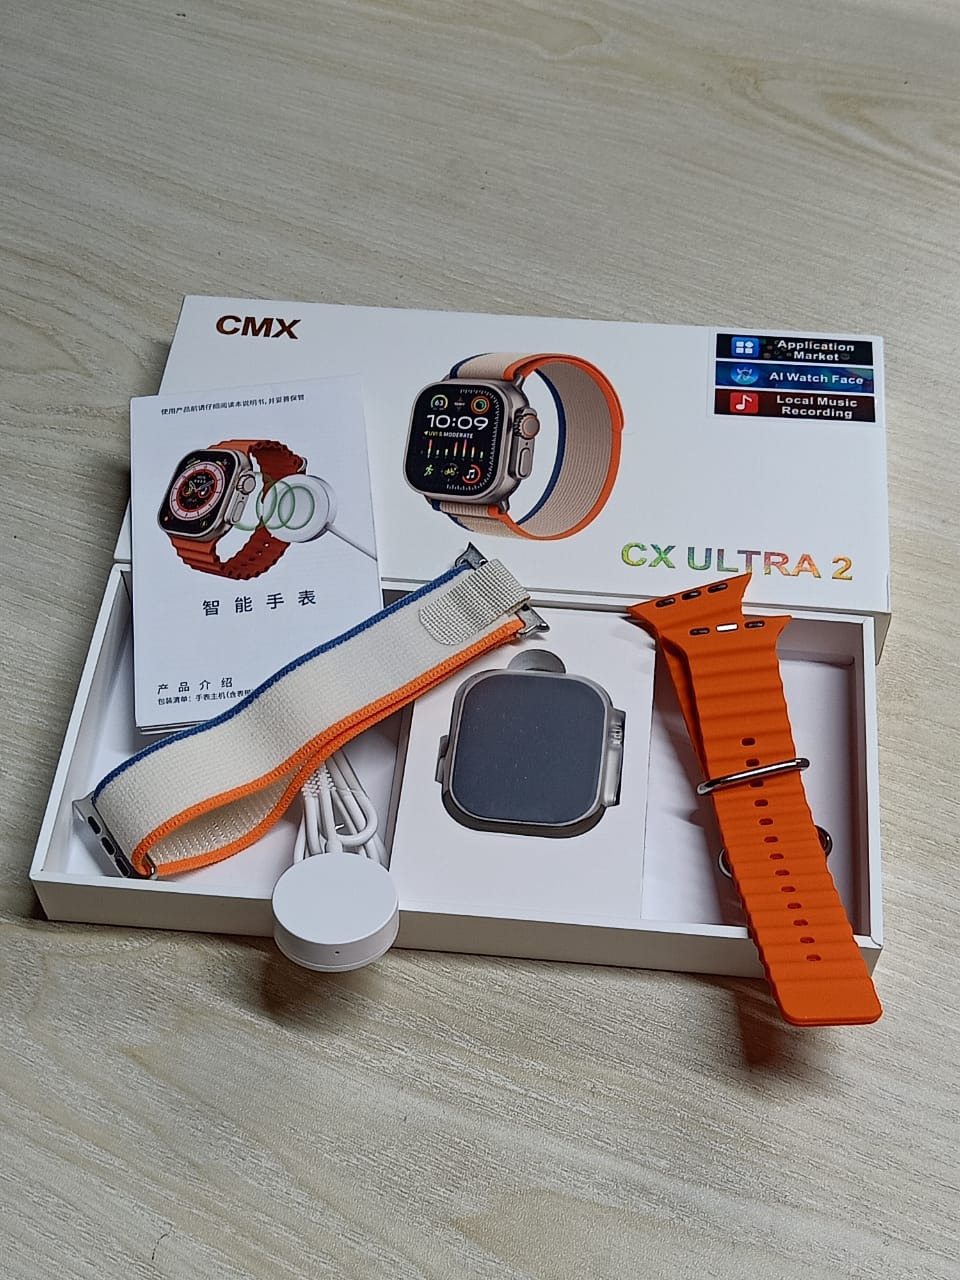 CMX CX Ultra 2 Amoled Smartwatch - Orange Color